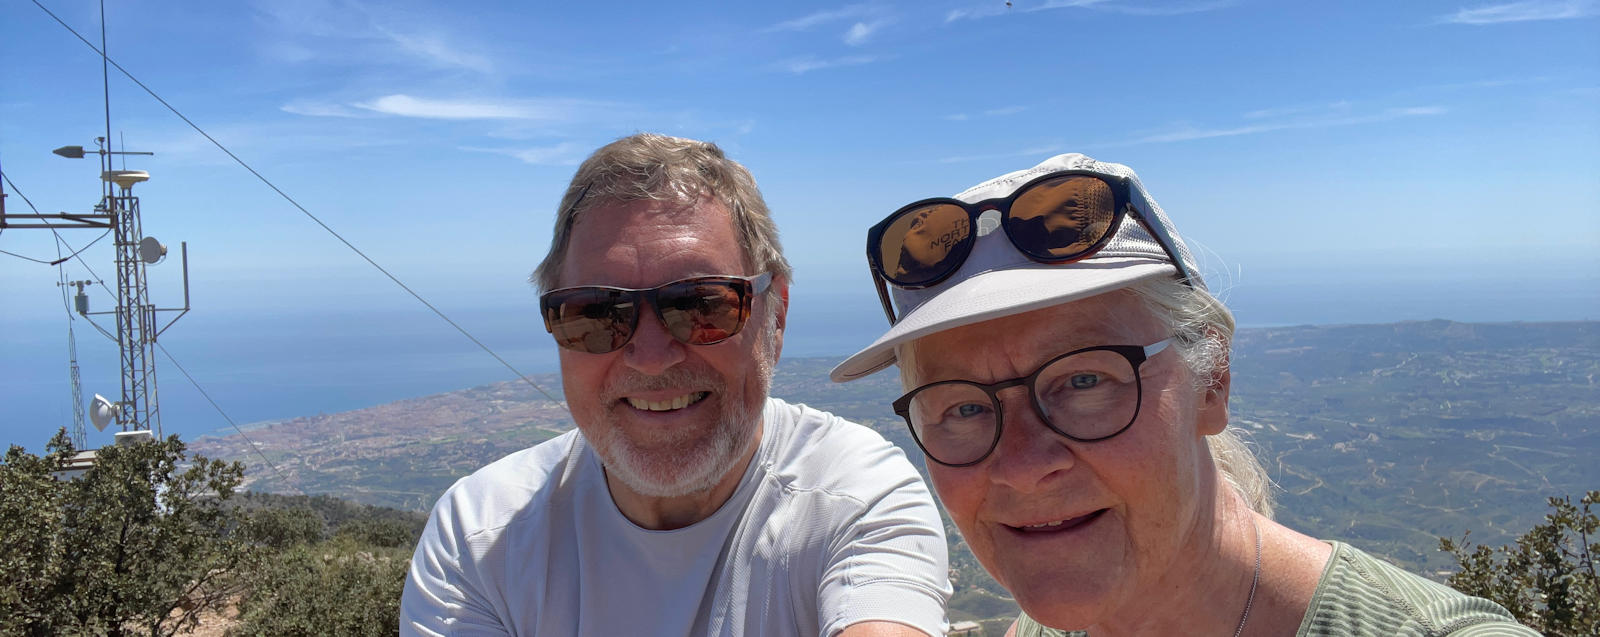 Selfie fra Pico Mijas, det højeste punkt i Sierra de Mijas